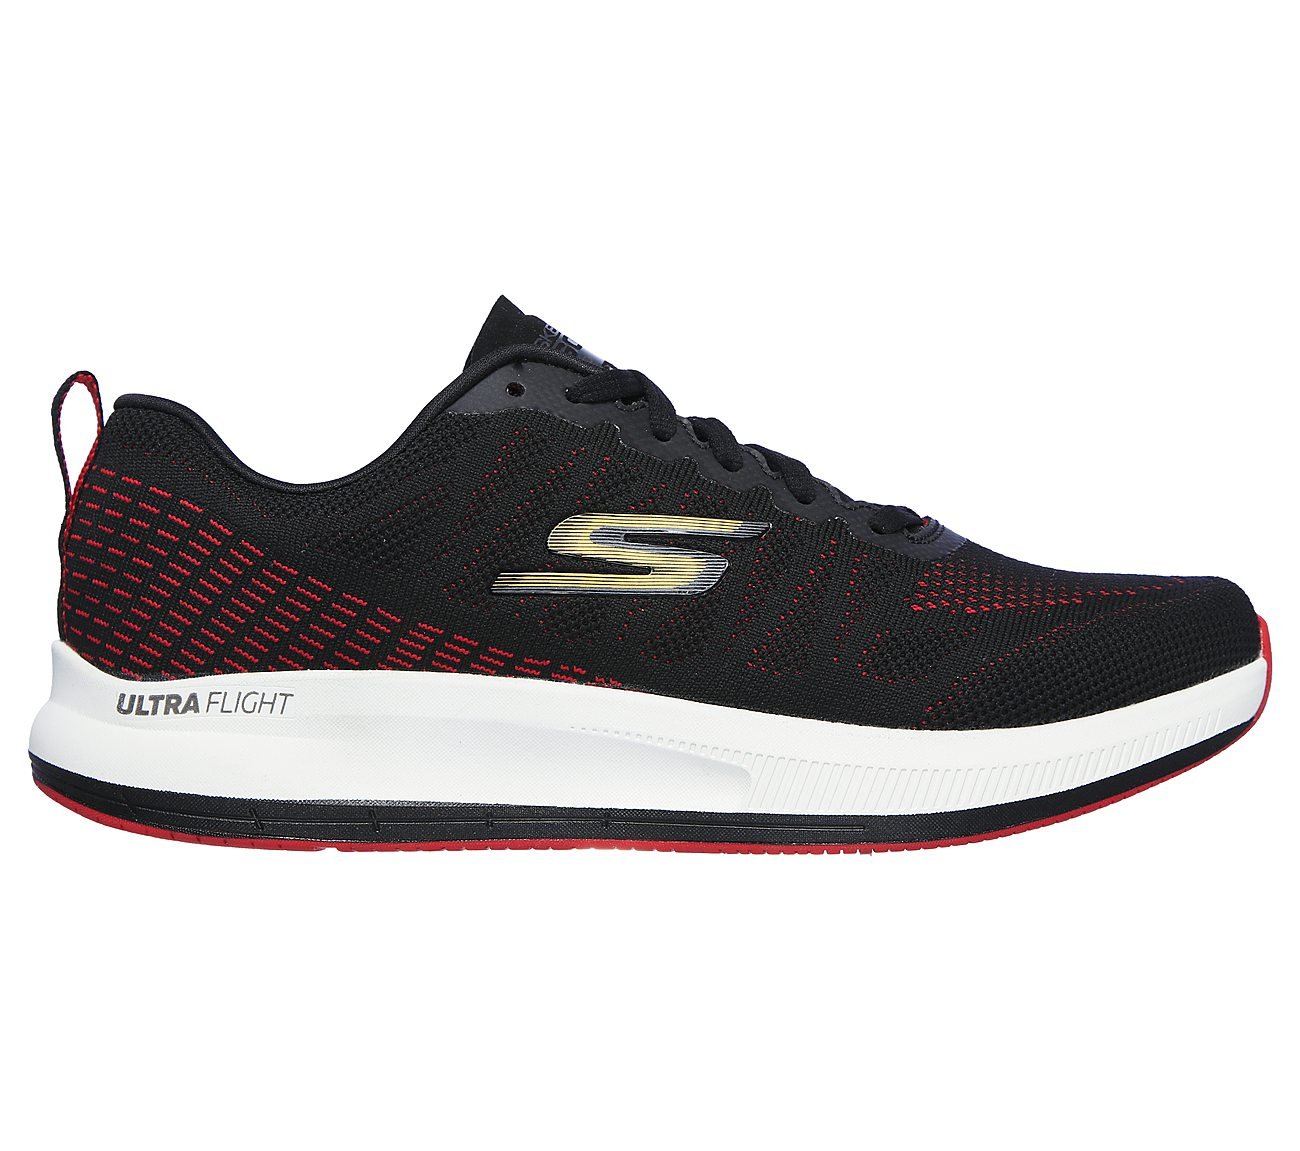 GO RUN PULSE - STRADA, BLACK/RED Footwear Right View